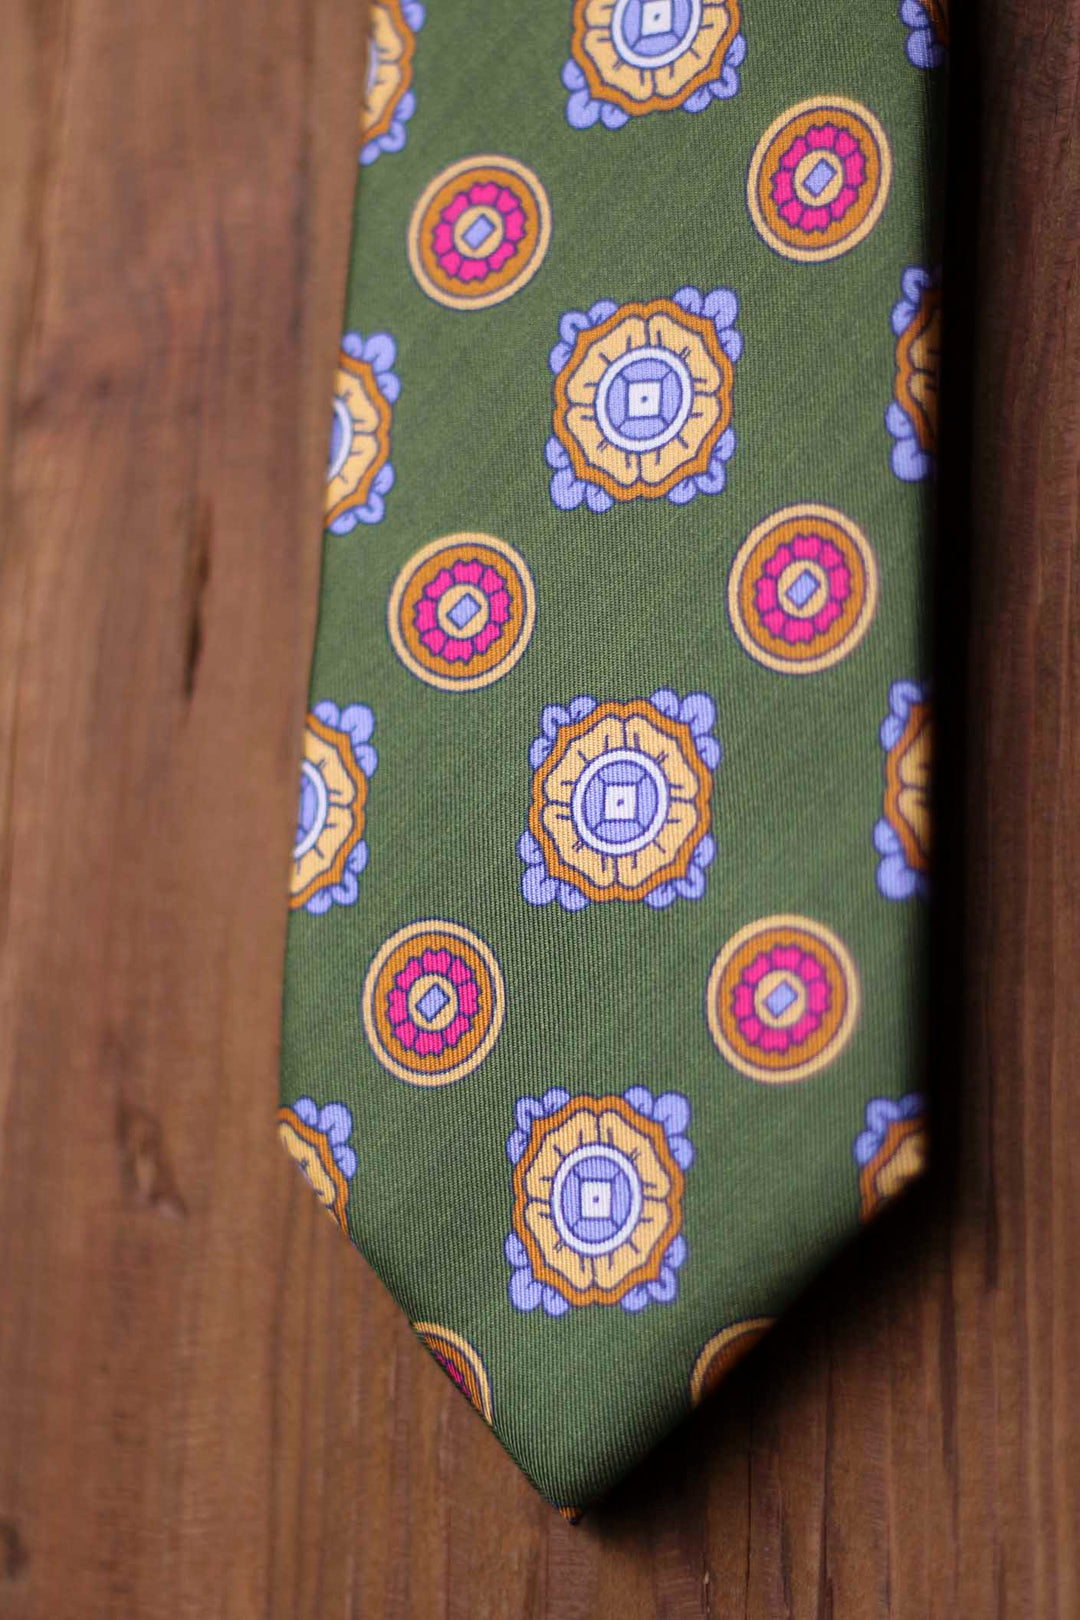 Grass Green Silk Tie Royal Shield